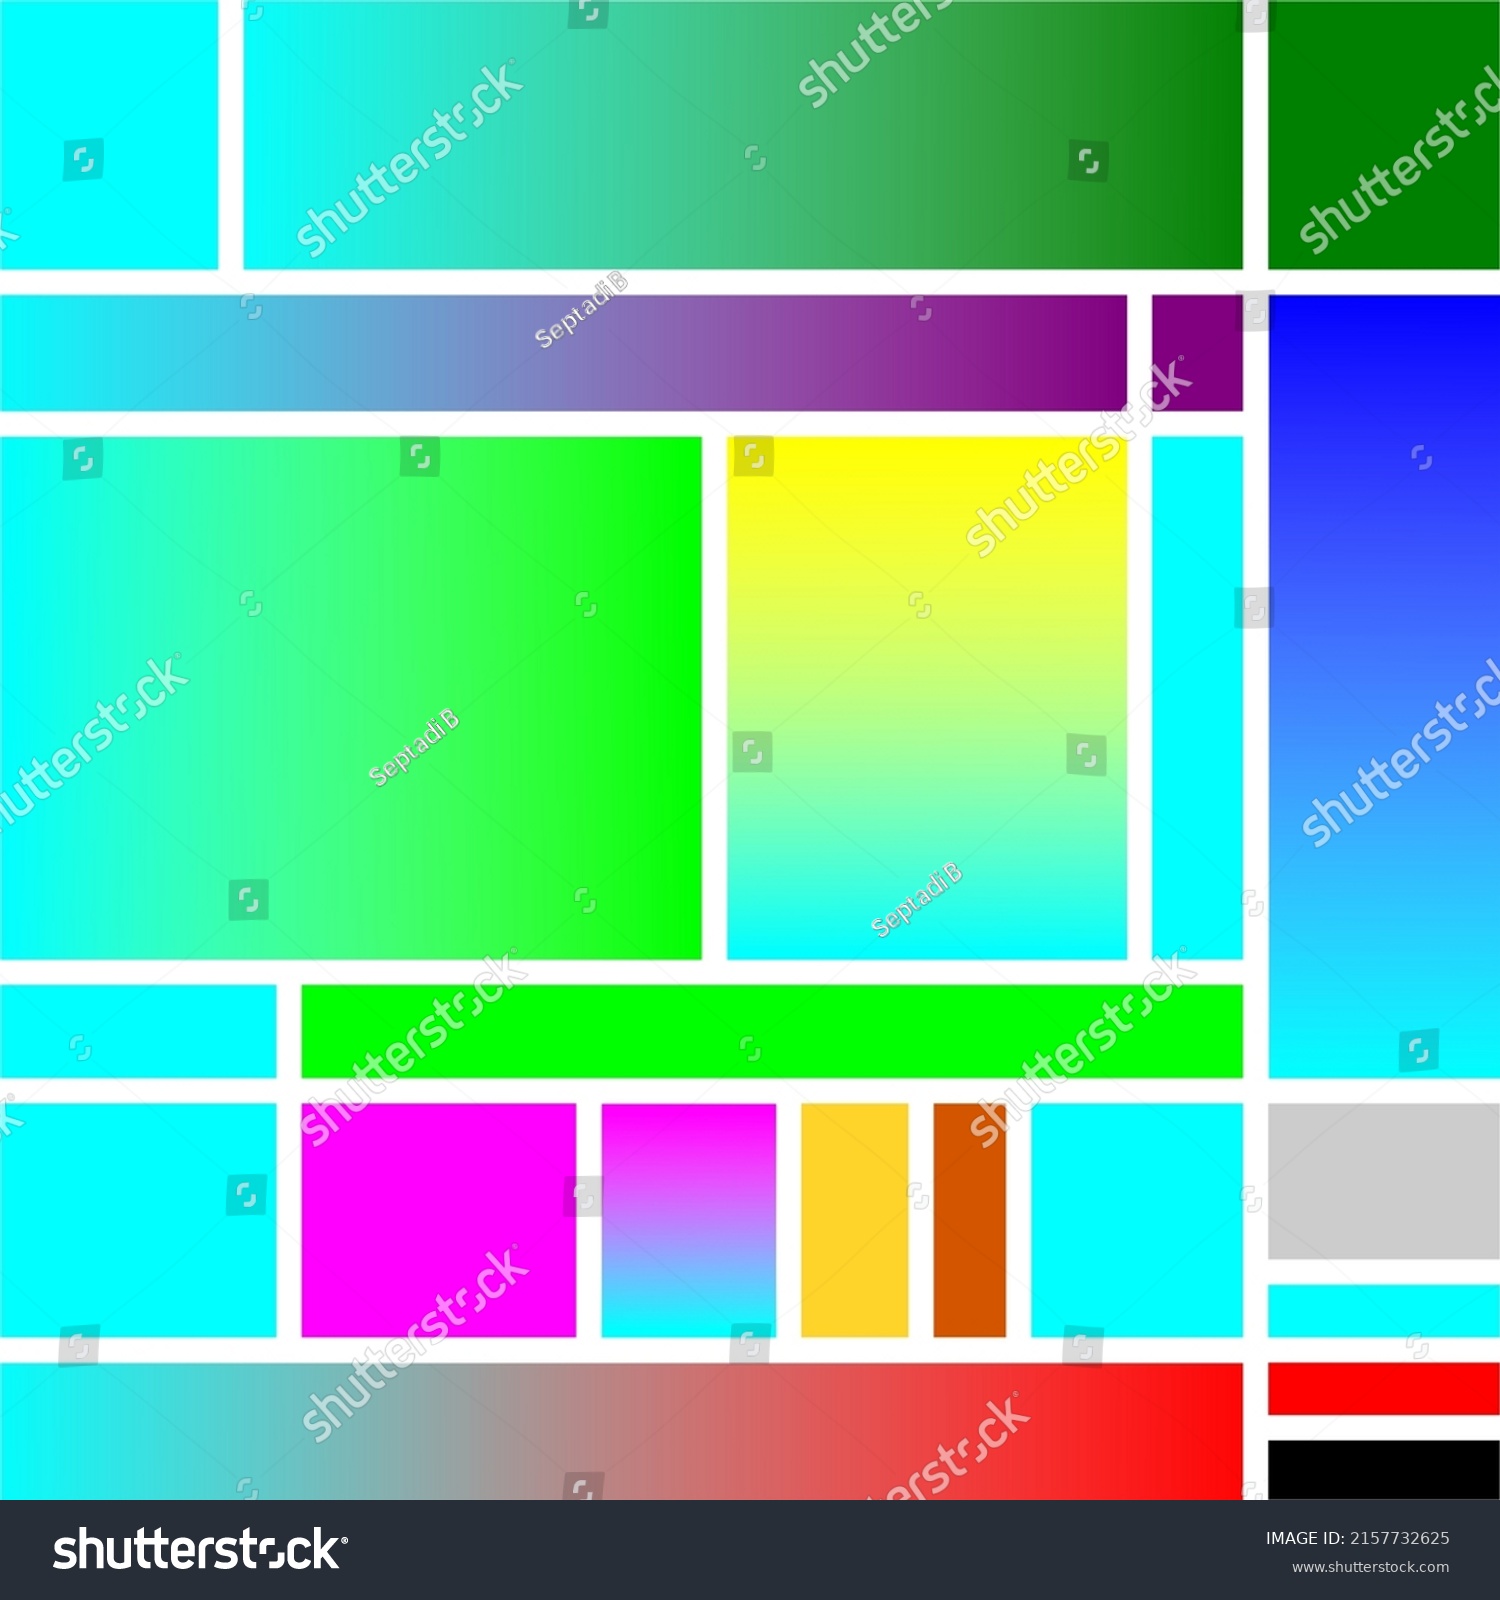 74 Grey multiple gradient square Images, Stock Photos & Vectors ...